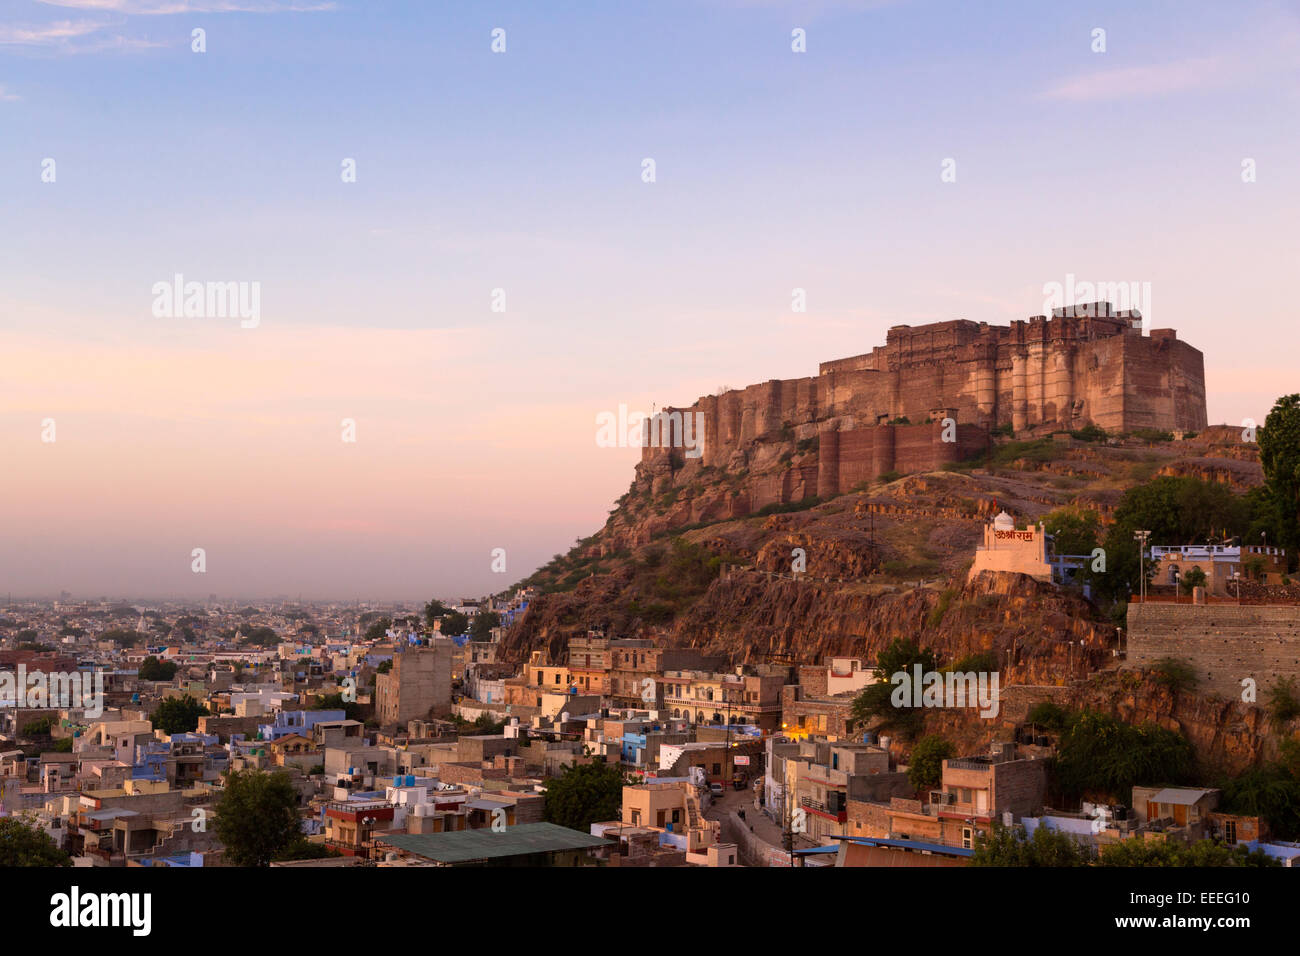 India, Rajasthan,Jodhpur, Meherangarh Fort and old city at dawn Stock Photo